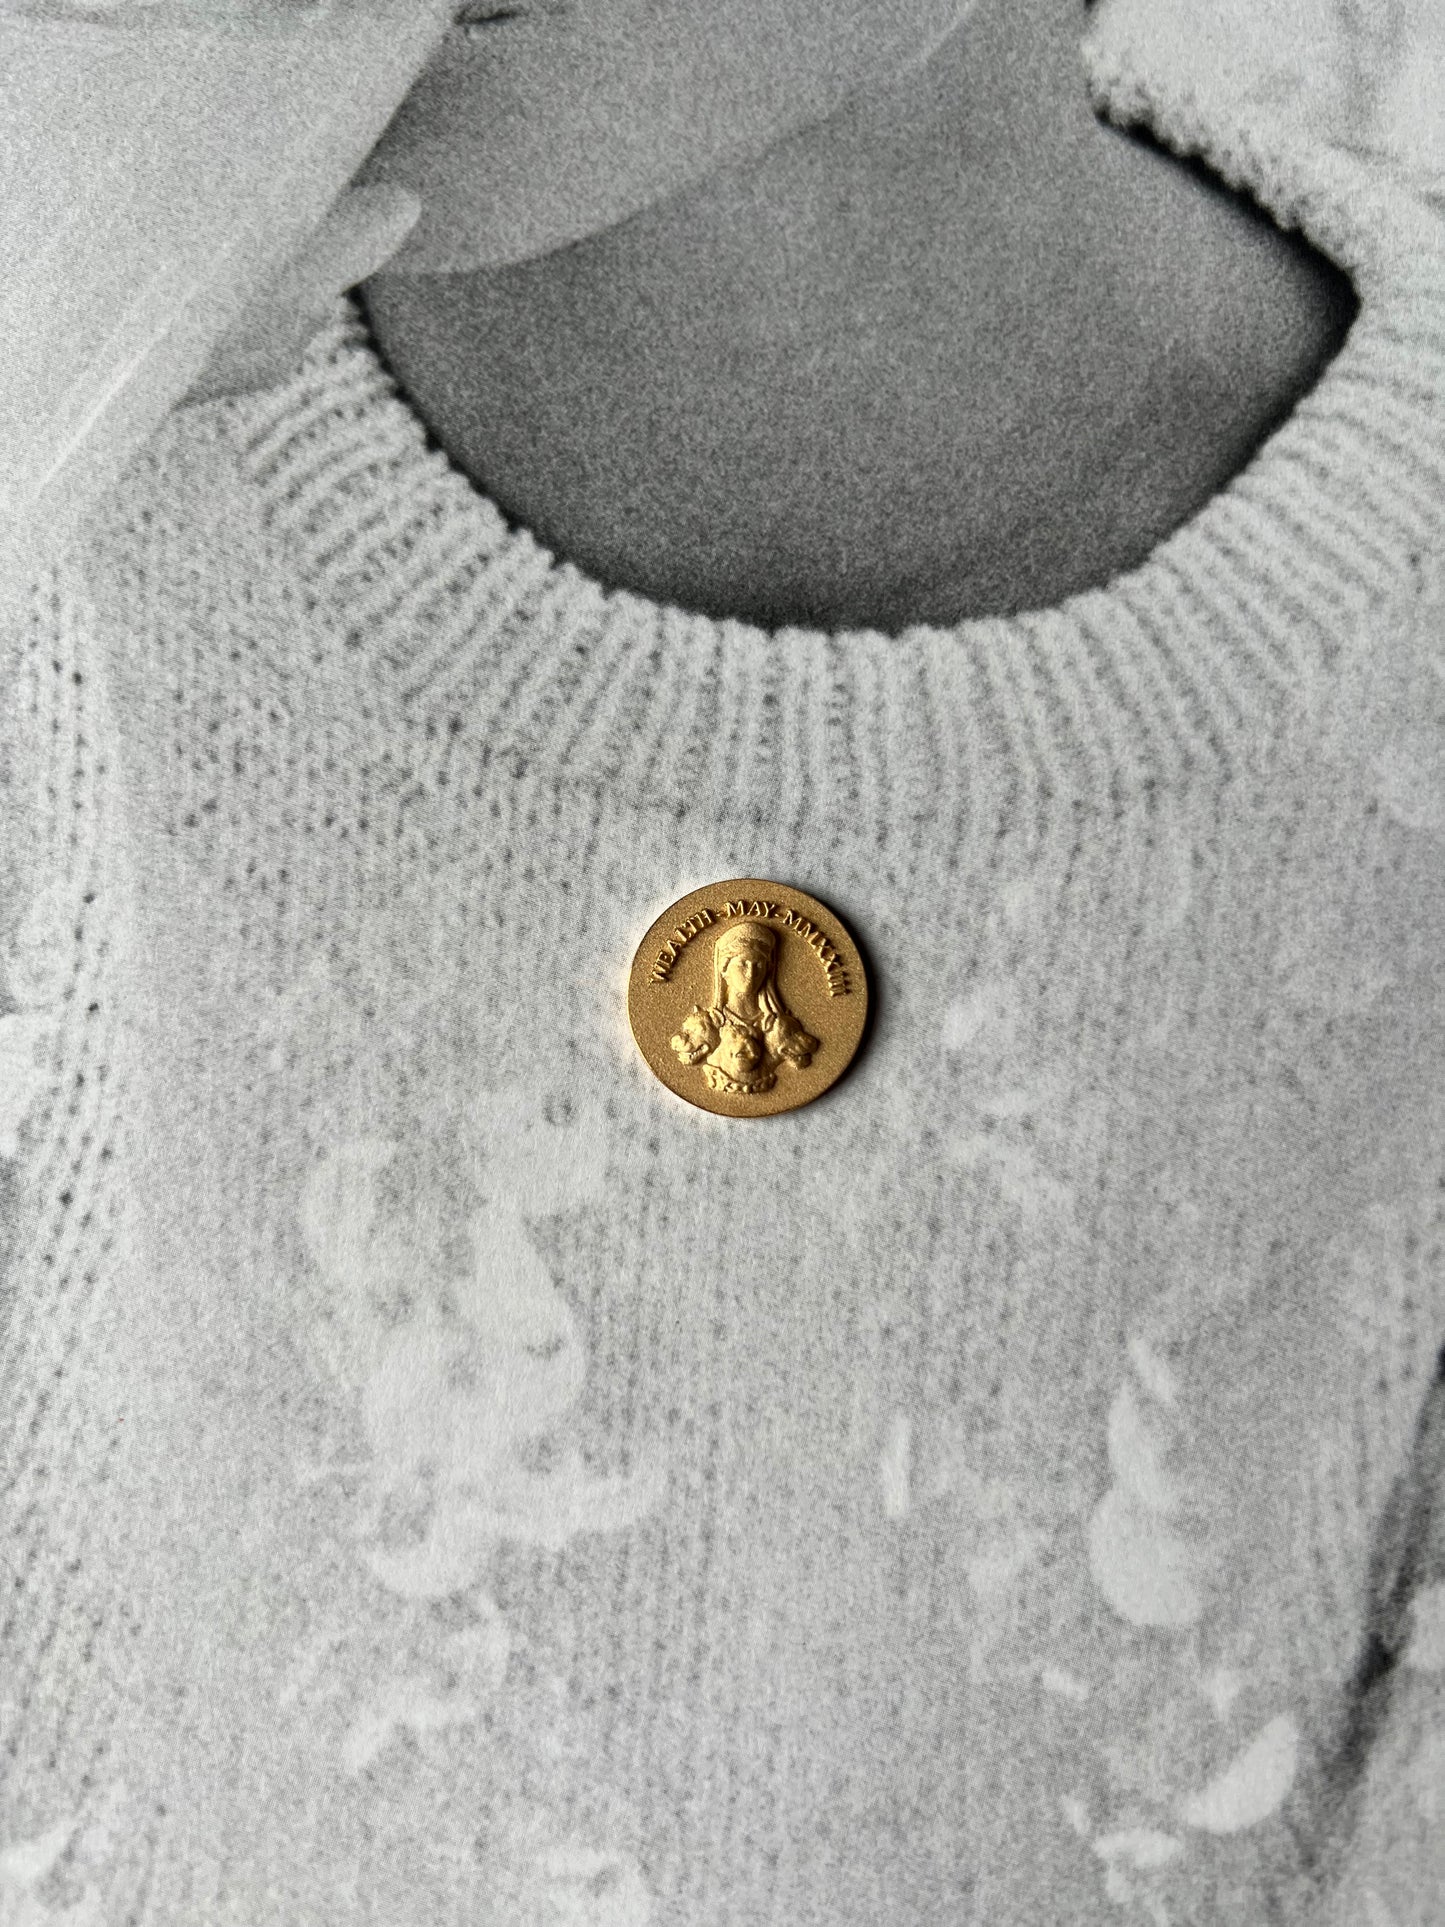 Persephone antique coin gold